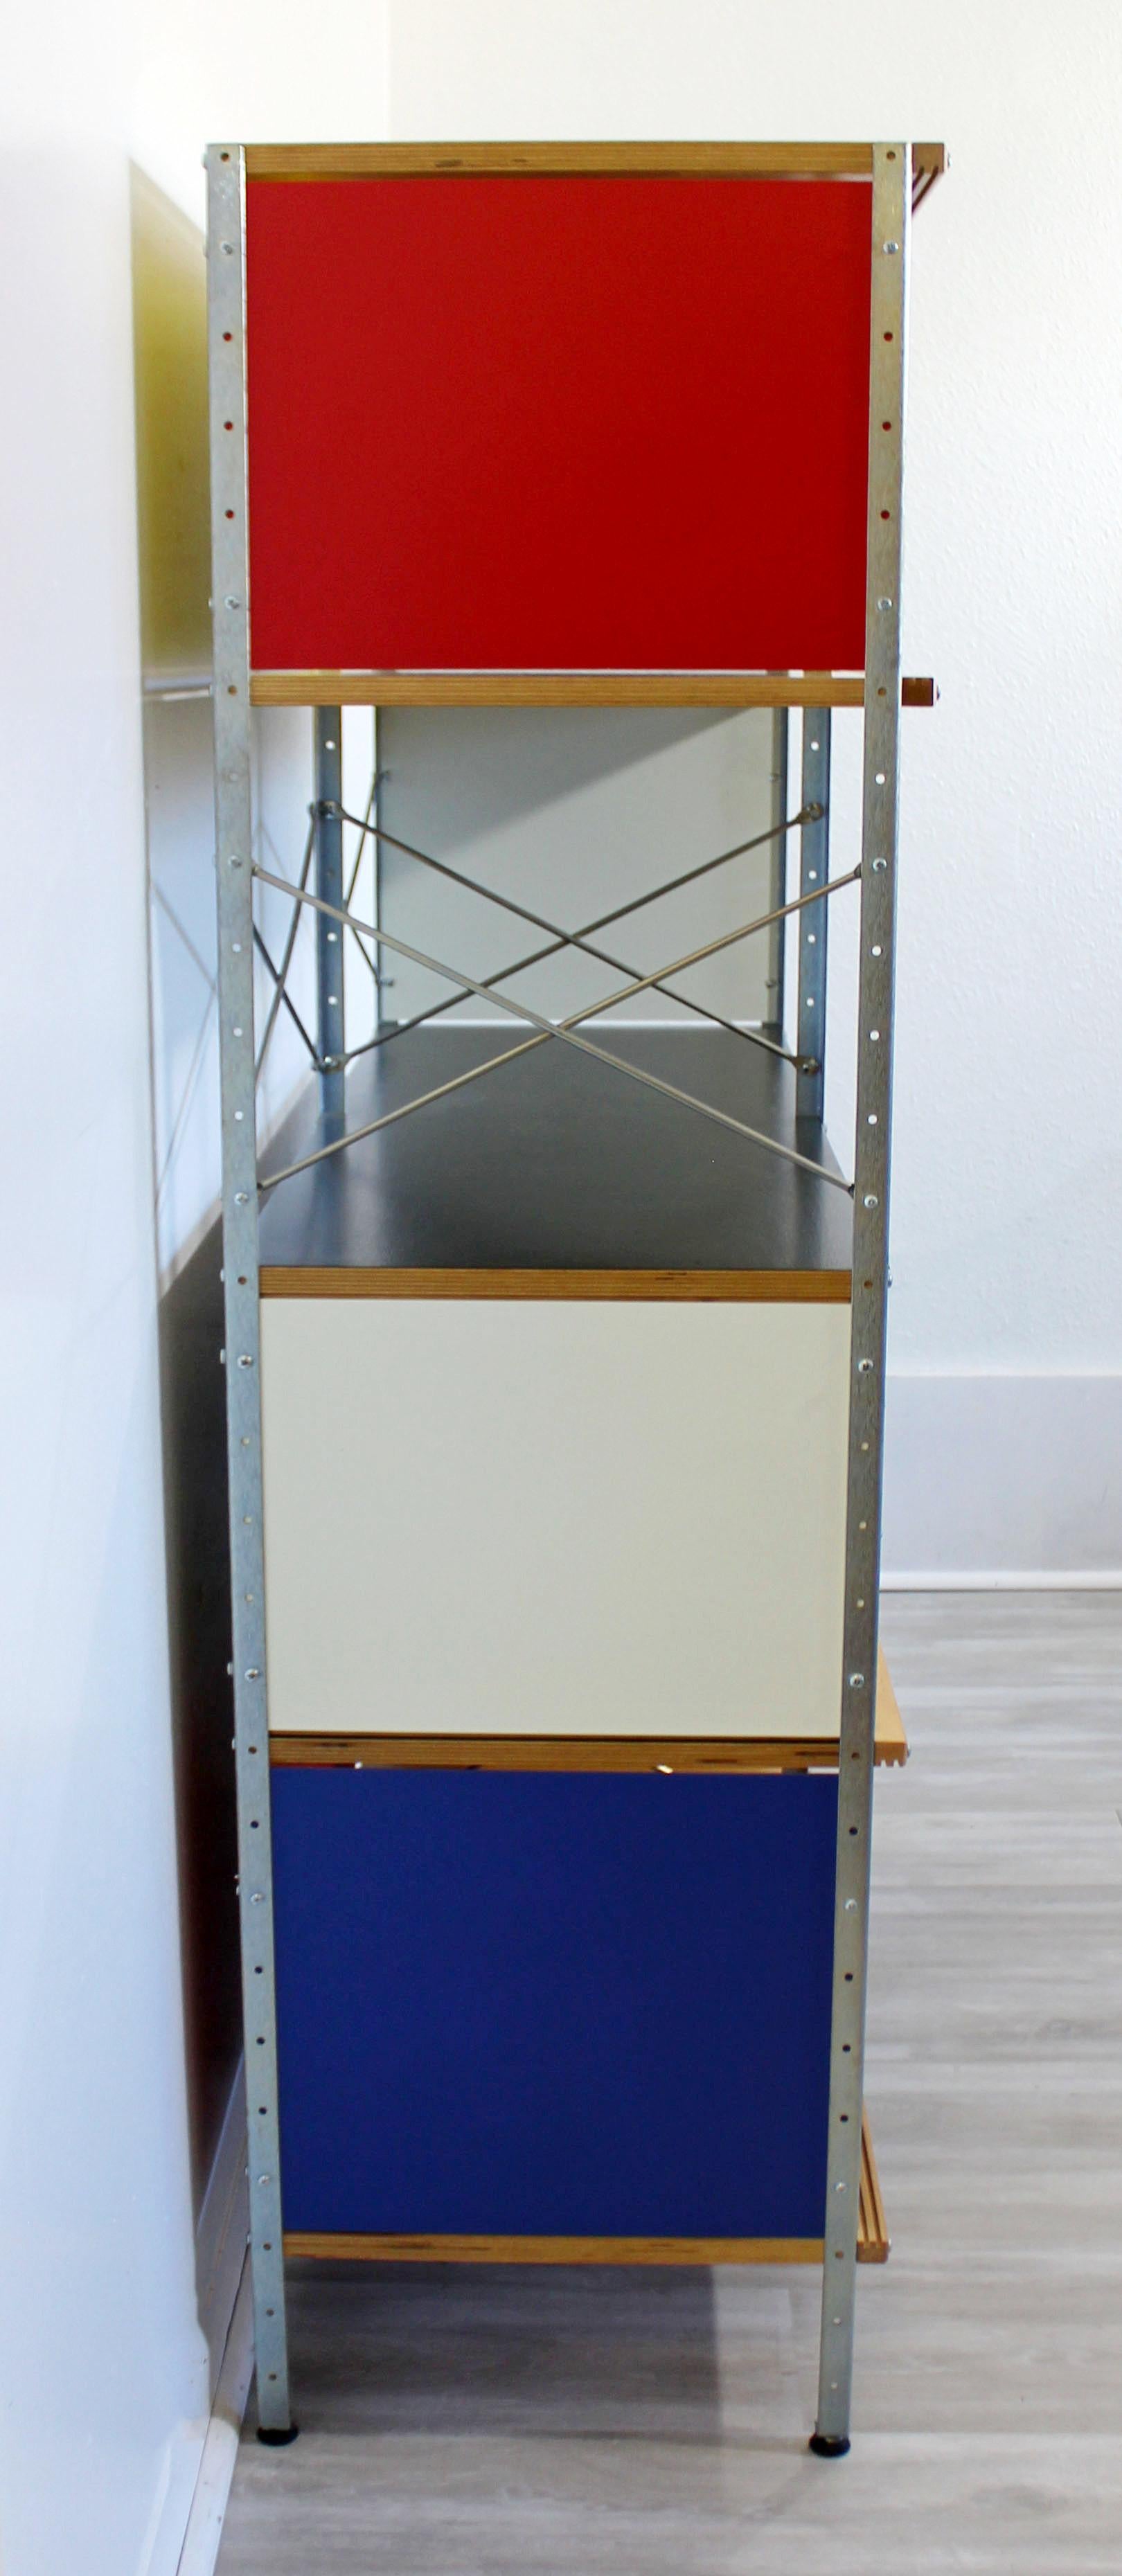 American Contemporary Modern Herman Miller 4 x 2 Storage Shelving Unit 2000s 3-Drawer